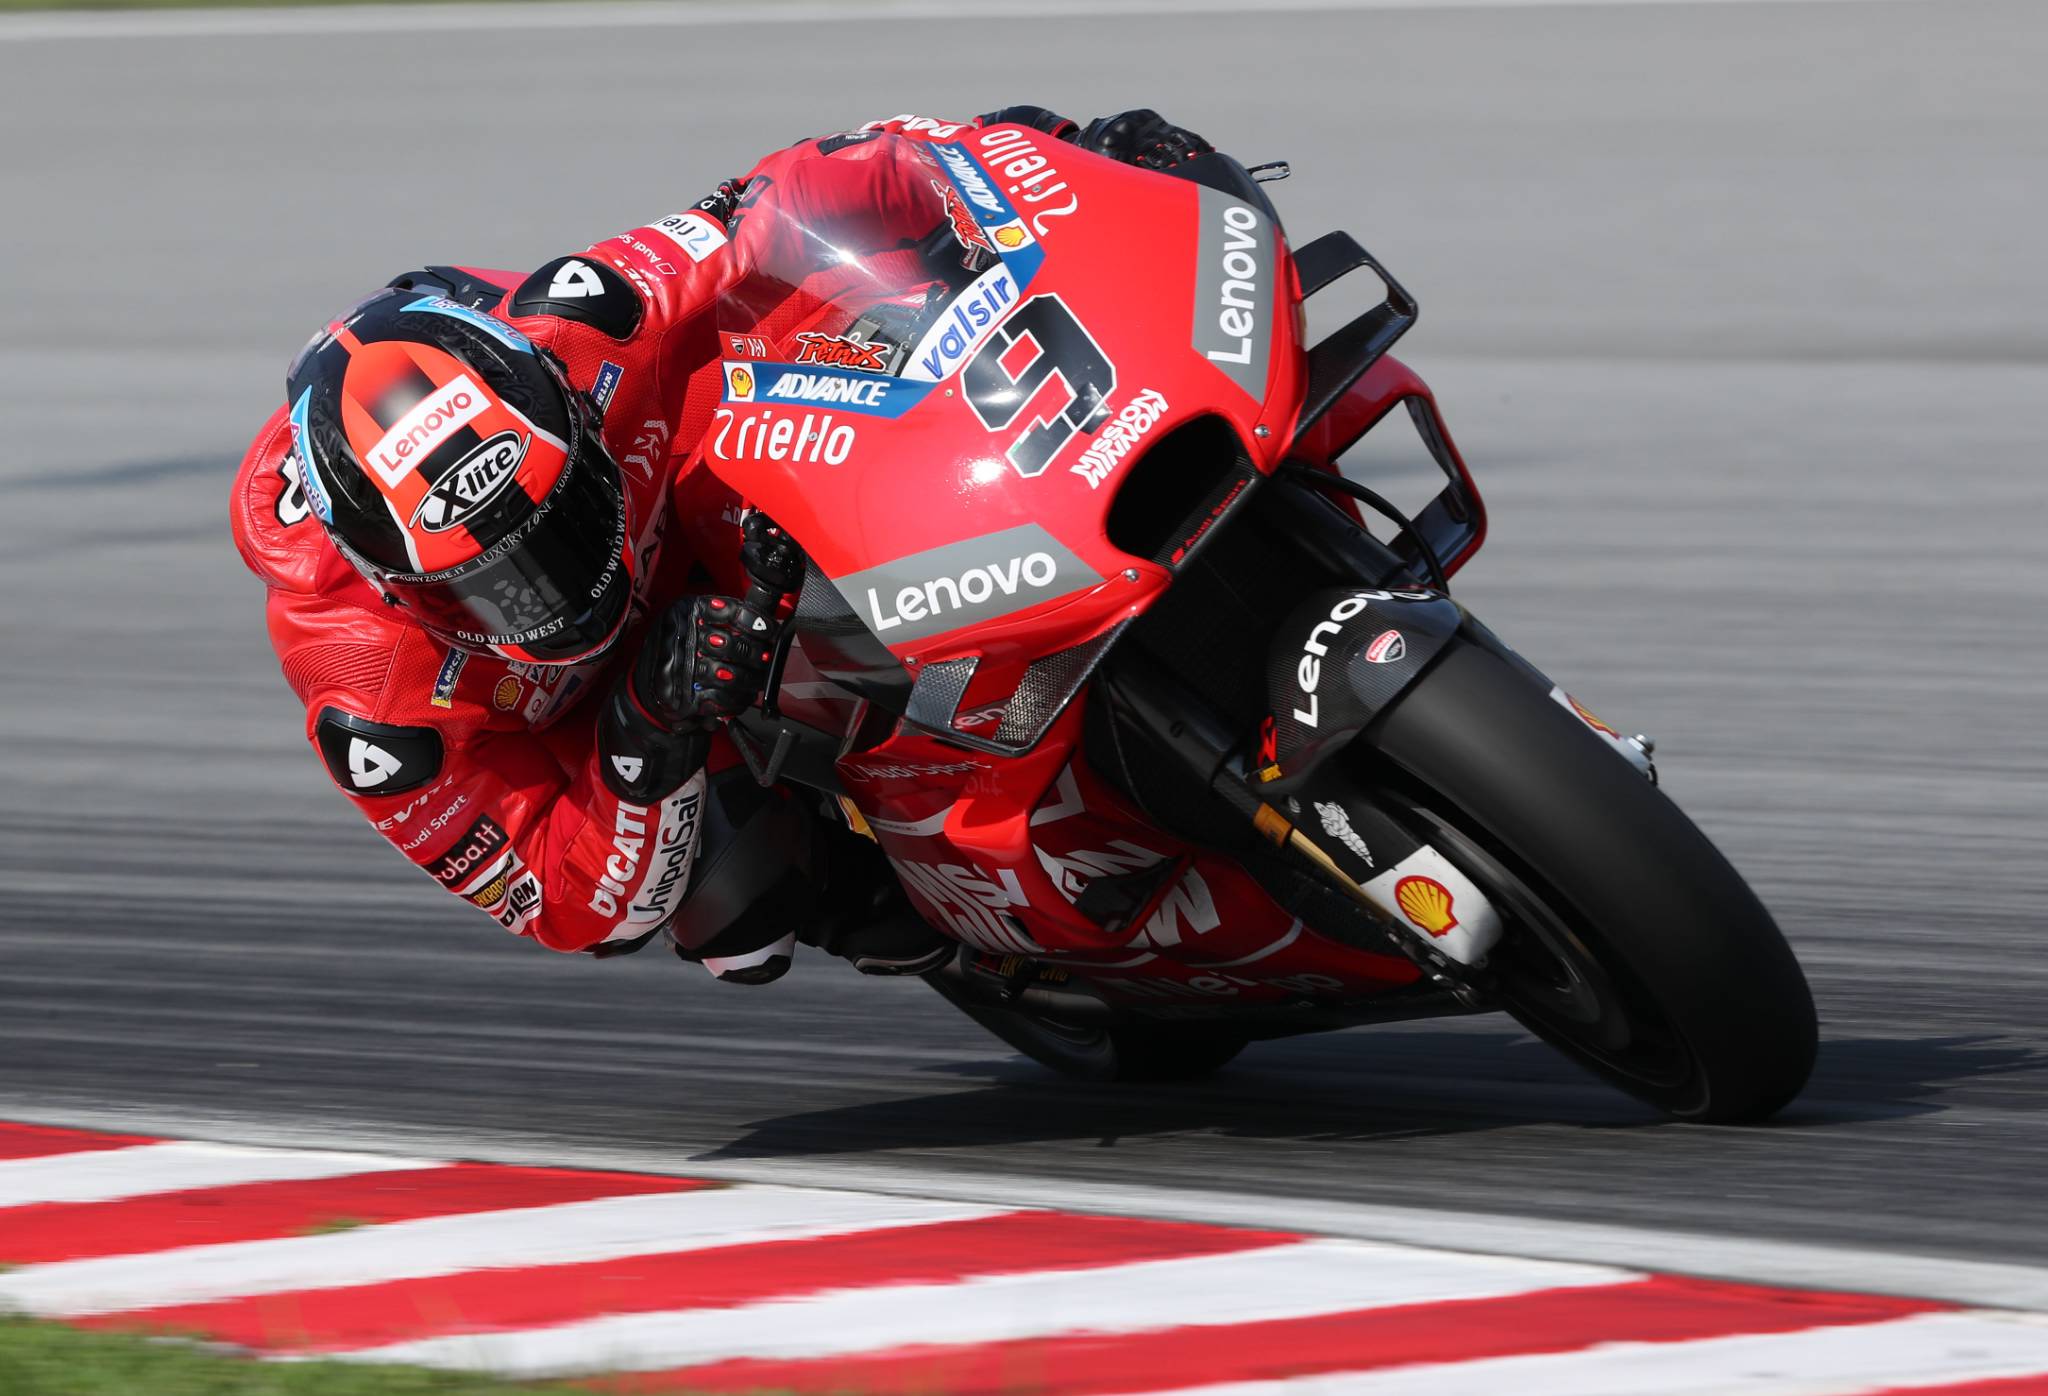 PICS: Ducati unveils 'six wing' fairing at Sepang